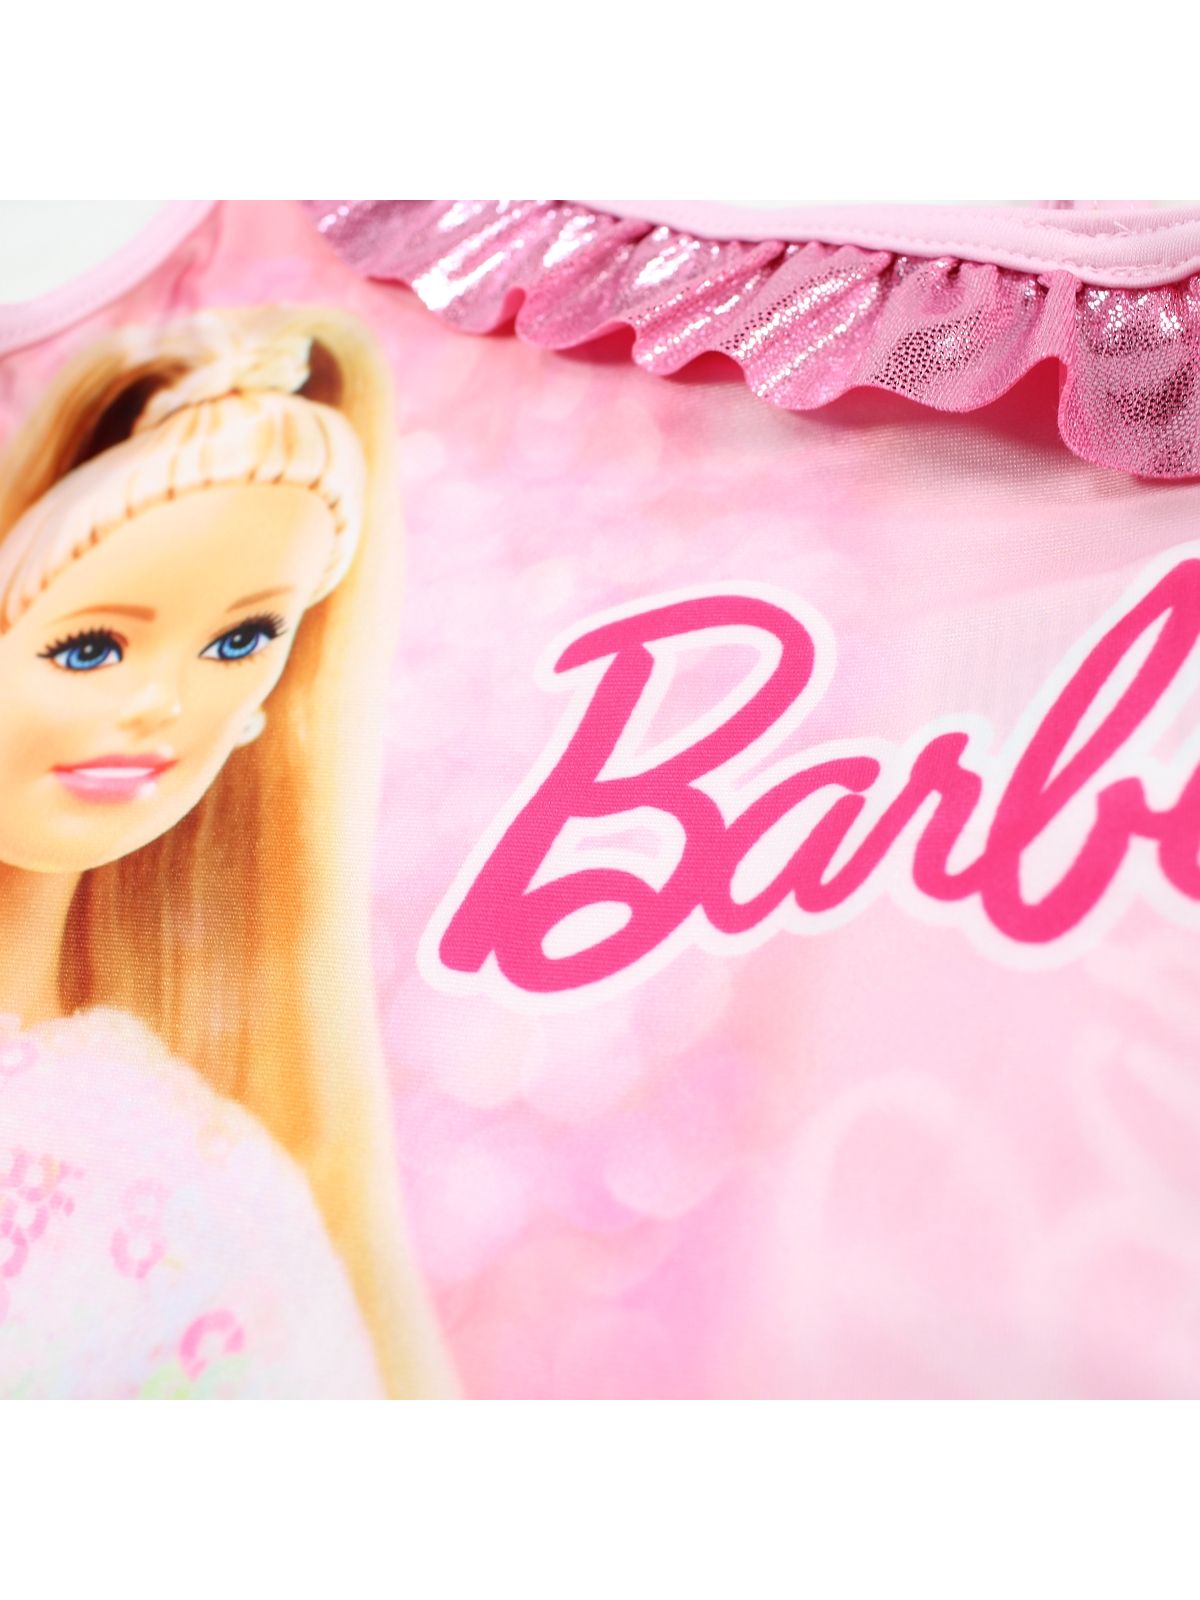 Barbie-Badeanzug.